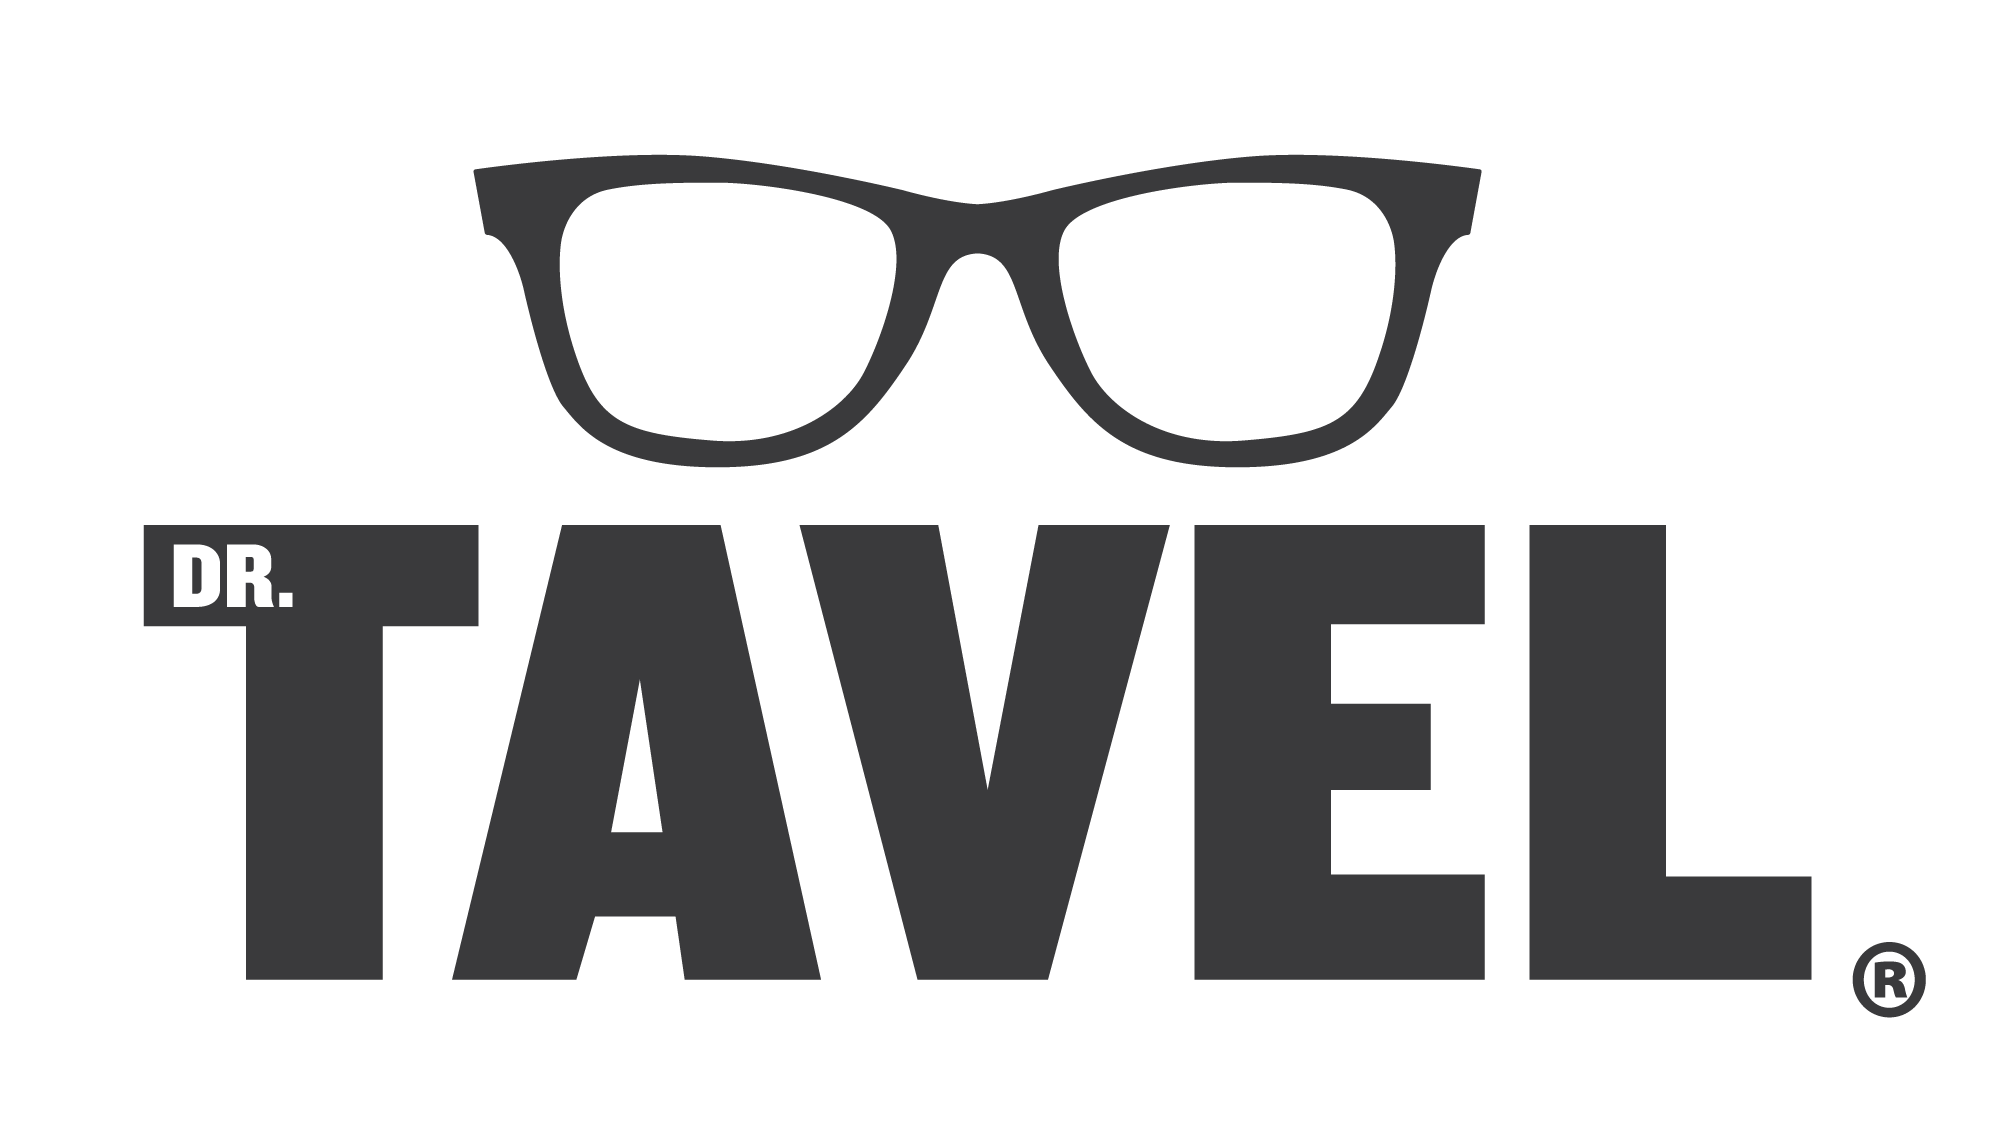 DrTavel_logo_stacked_glasses.png